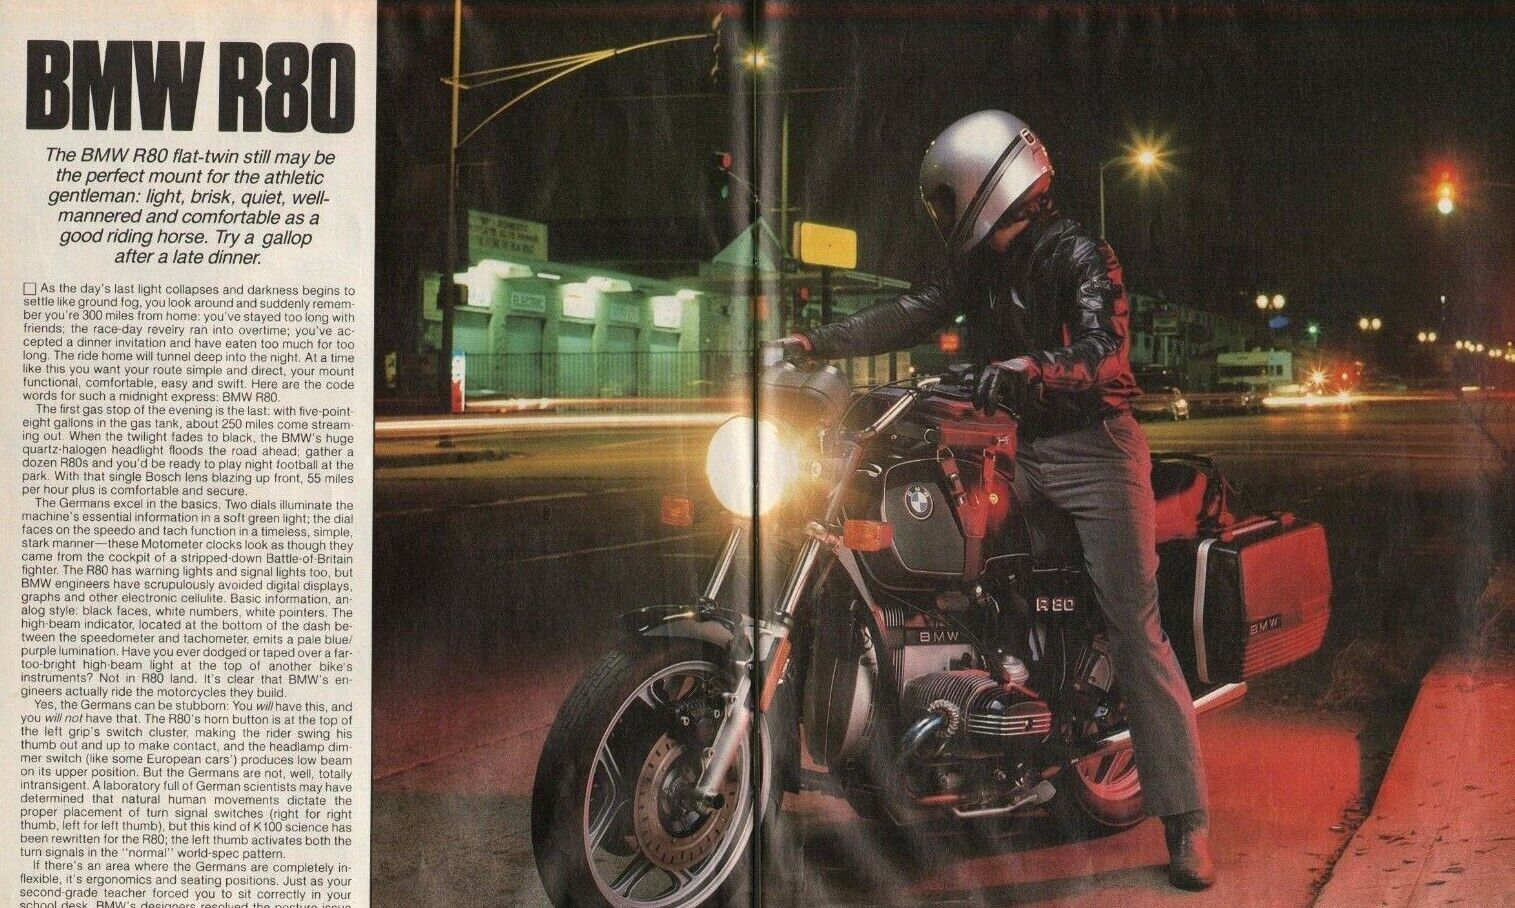 1985 BMW R80 - 6-Page Vintage Motorcycle Road Test Article